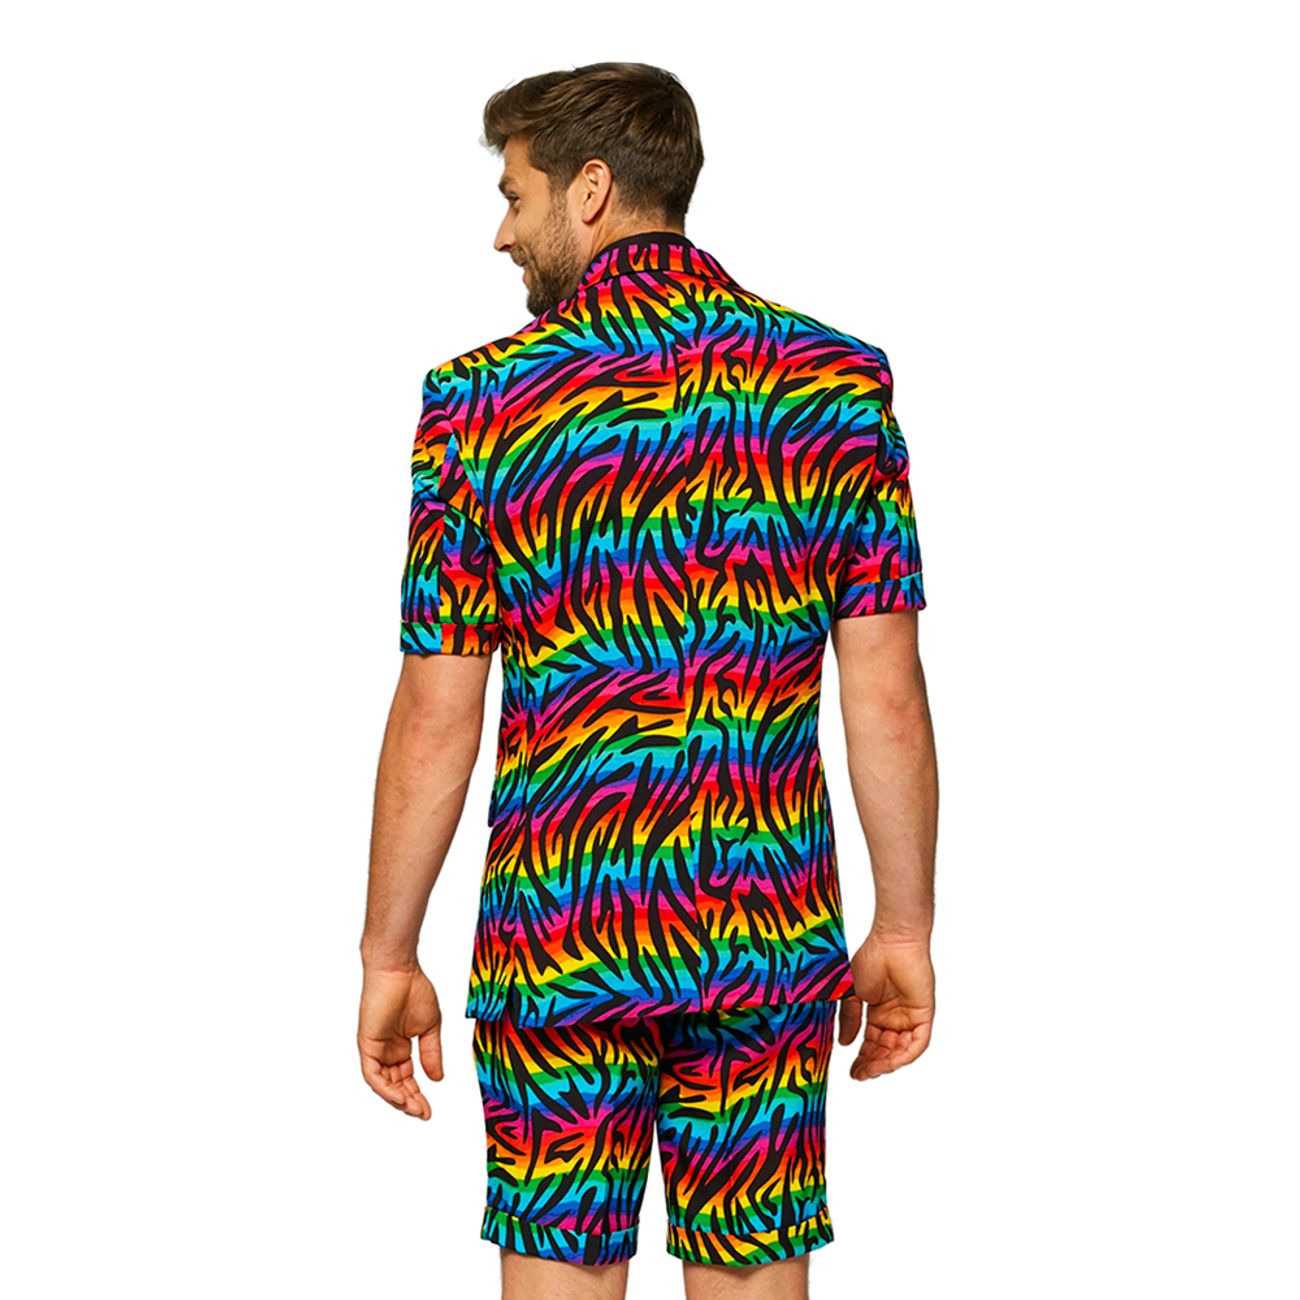 opposuits-wild-rainbow-shorts-kostym-74452-5